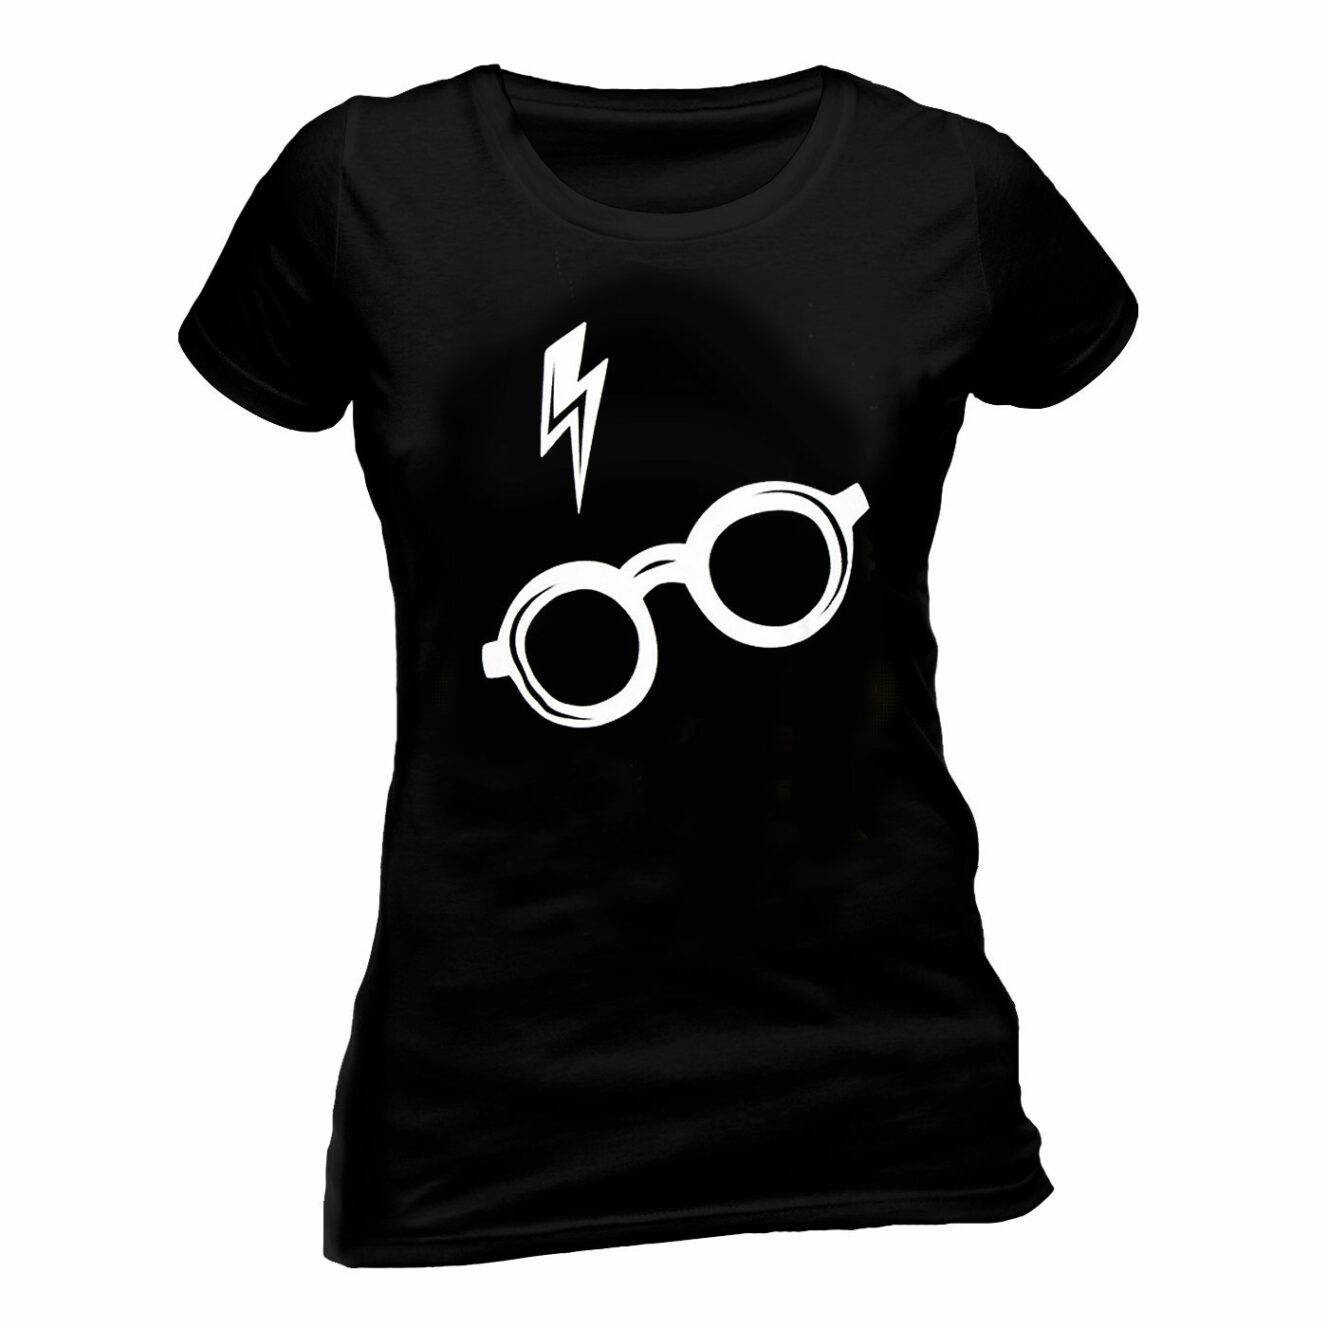 Sort Harry Potter T-shirt til damer med Lyn og Harrys briller trykt på brystet